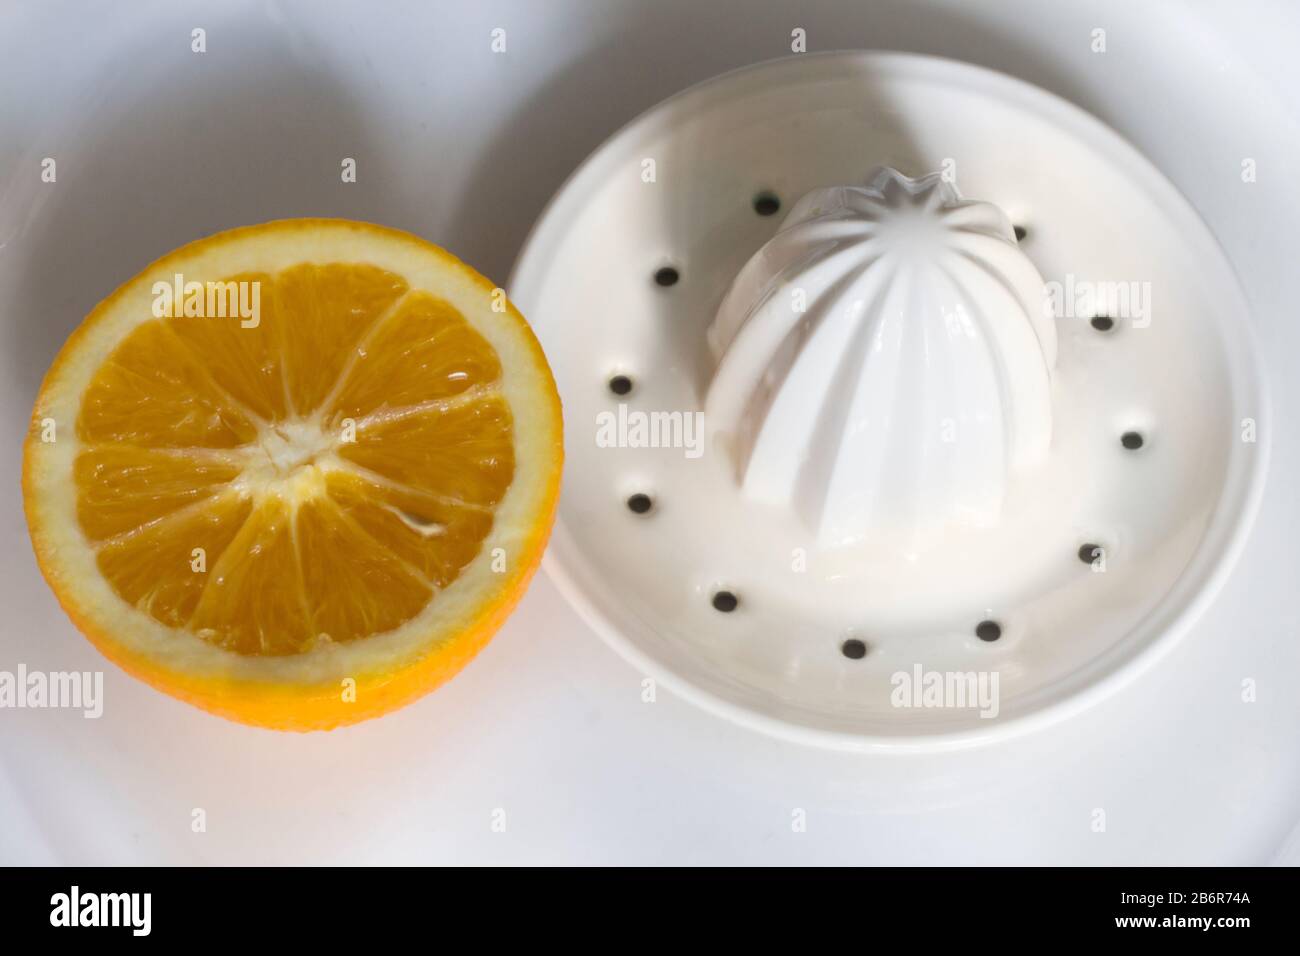 A orange and white ceramic citrus hand press on a plate. Stock Photo